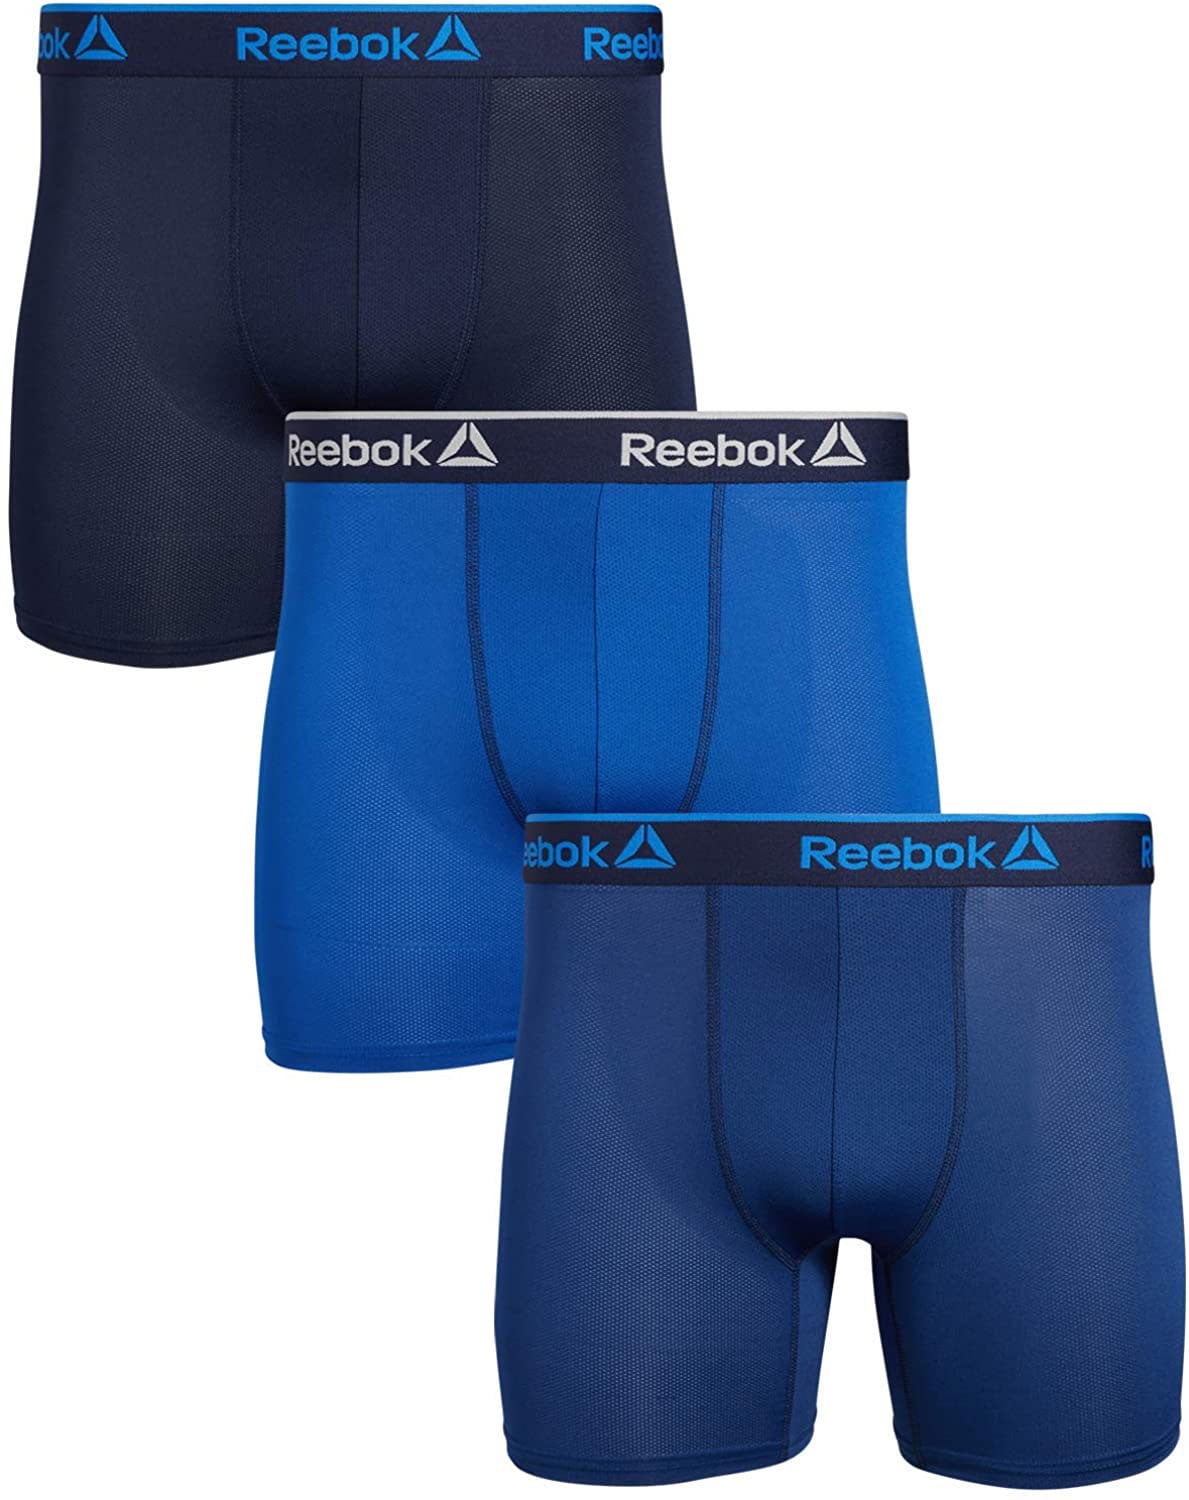 Reebok Men's Performance Boxer Briefs 4-Pack Only $14.99 (reg. $40) ::  Southern Savers